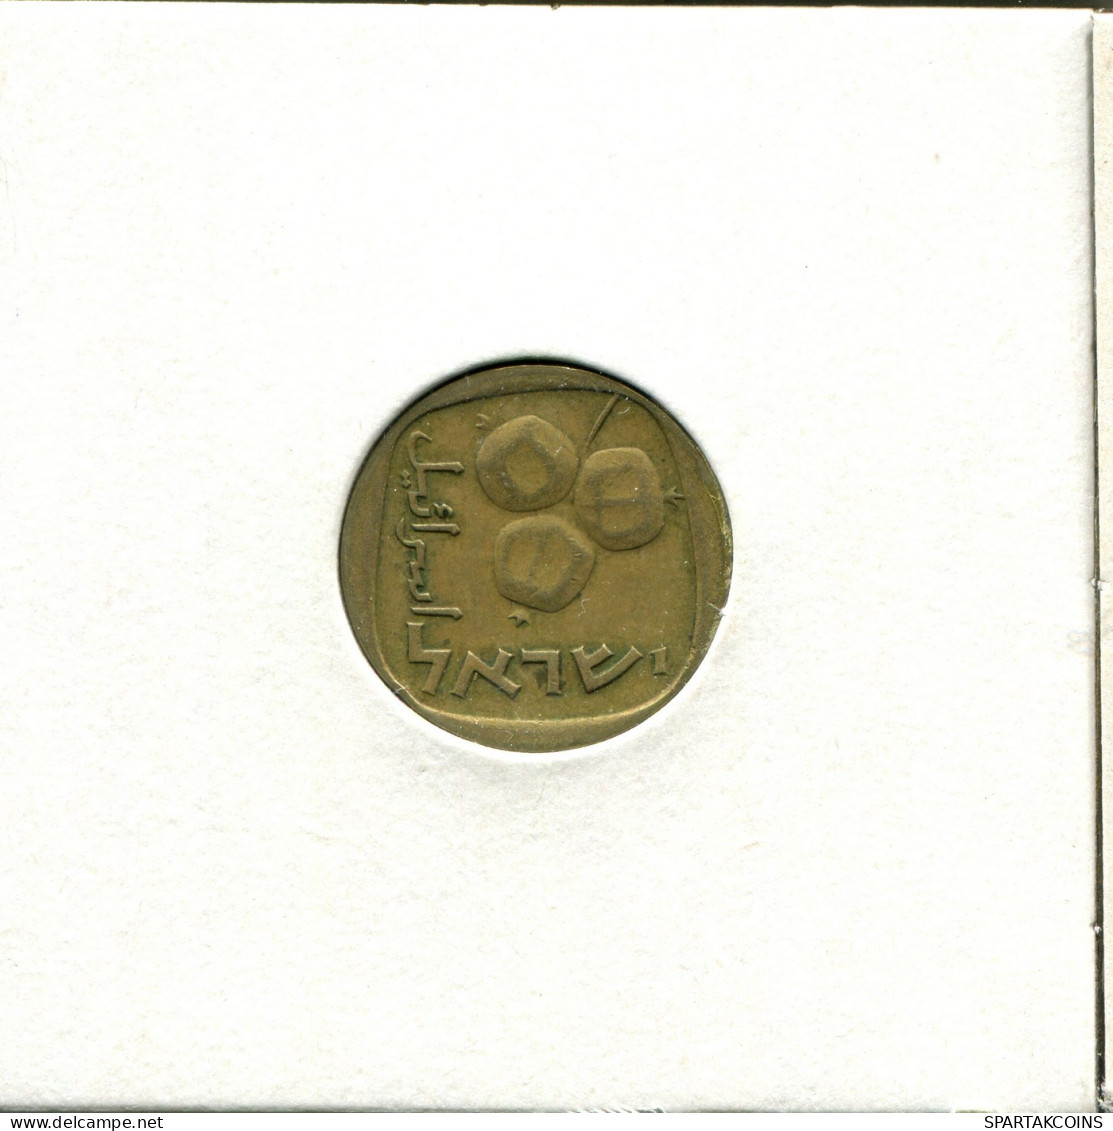 5 AGOROT 1970 ISRAEL Coin #AW752.U.A - Israel